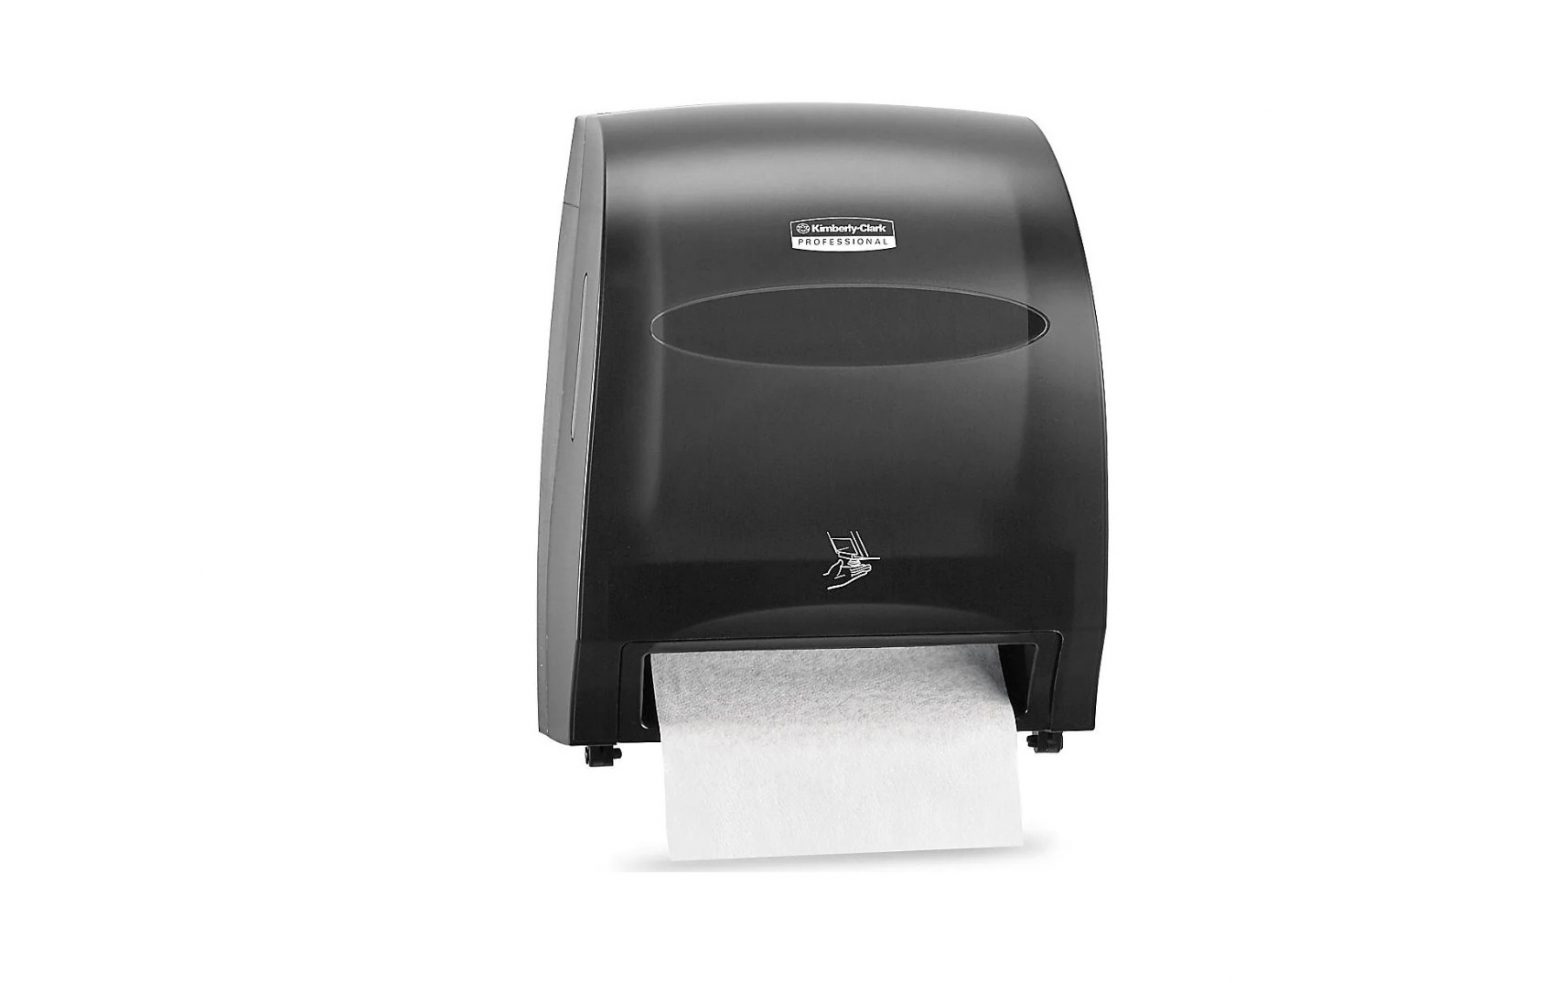 ULINE H-7883 Automatic Paper Towel Dispenser User Guide